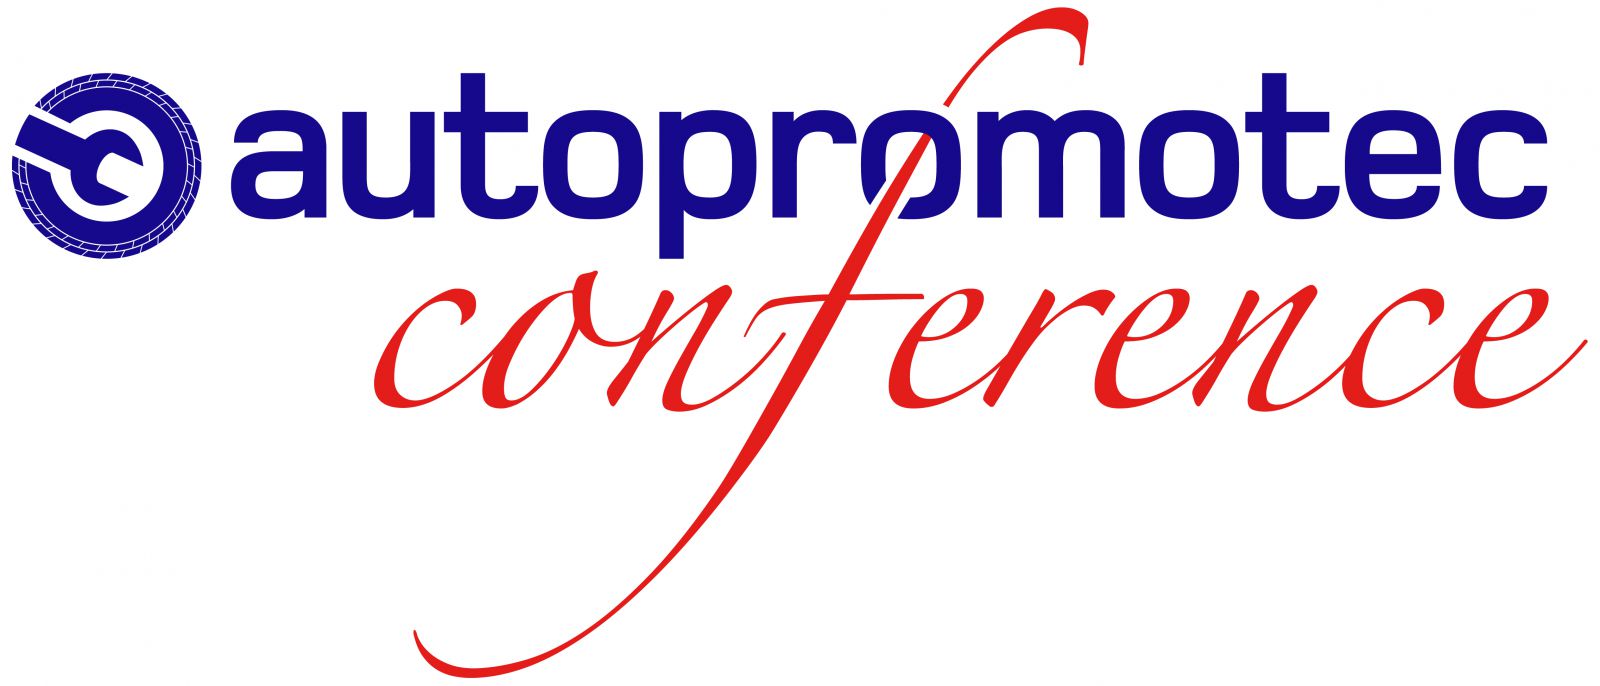 Autopromotec Conference